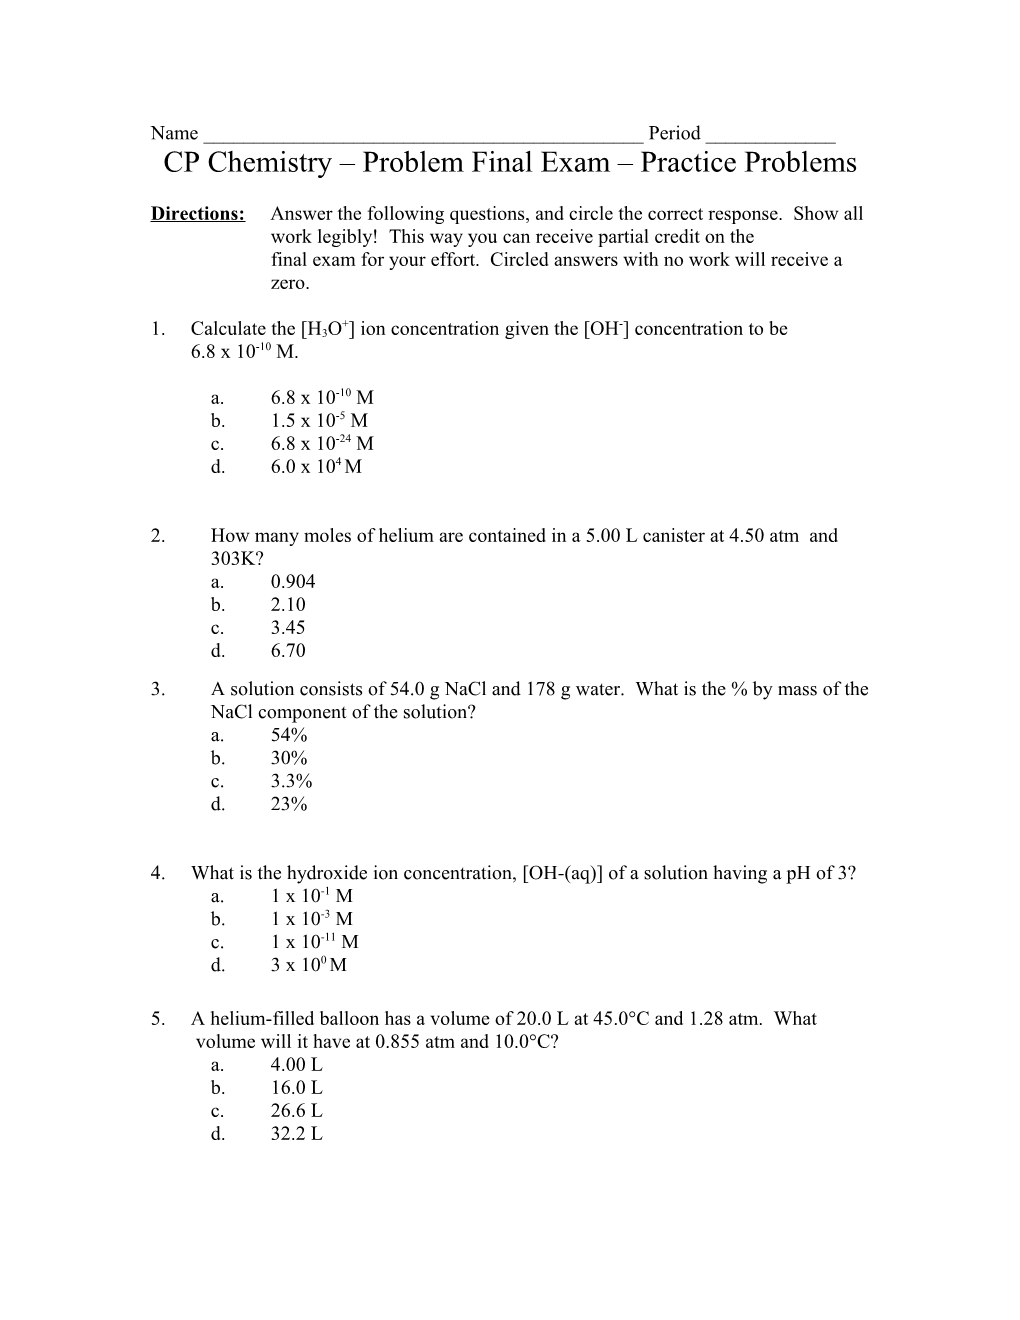 CP Chemistry Problem Final Exam Practice Problems